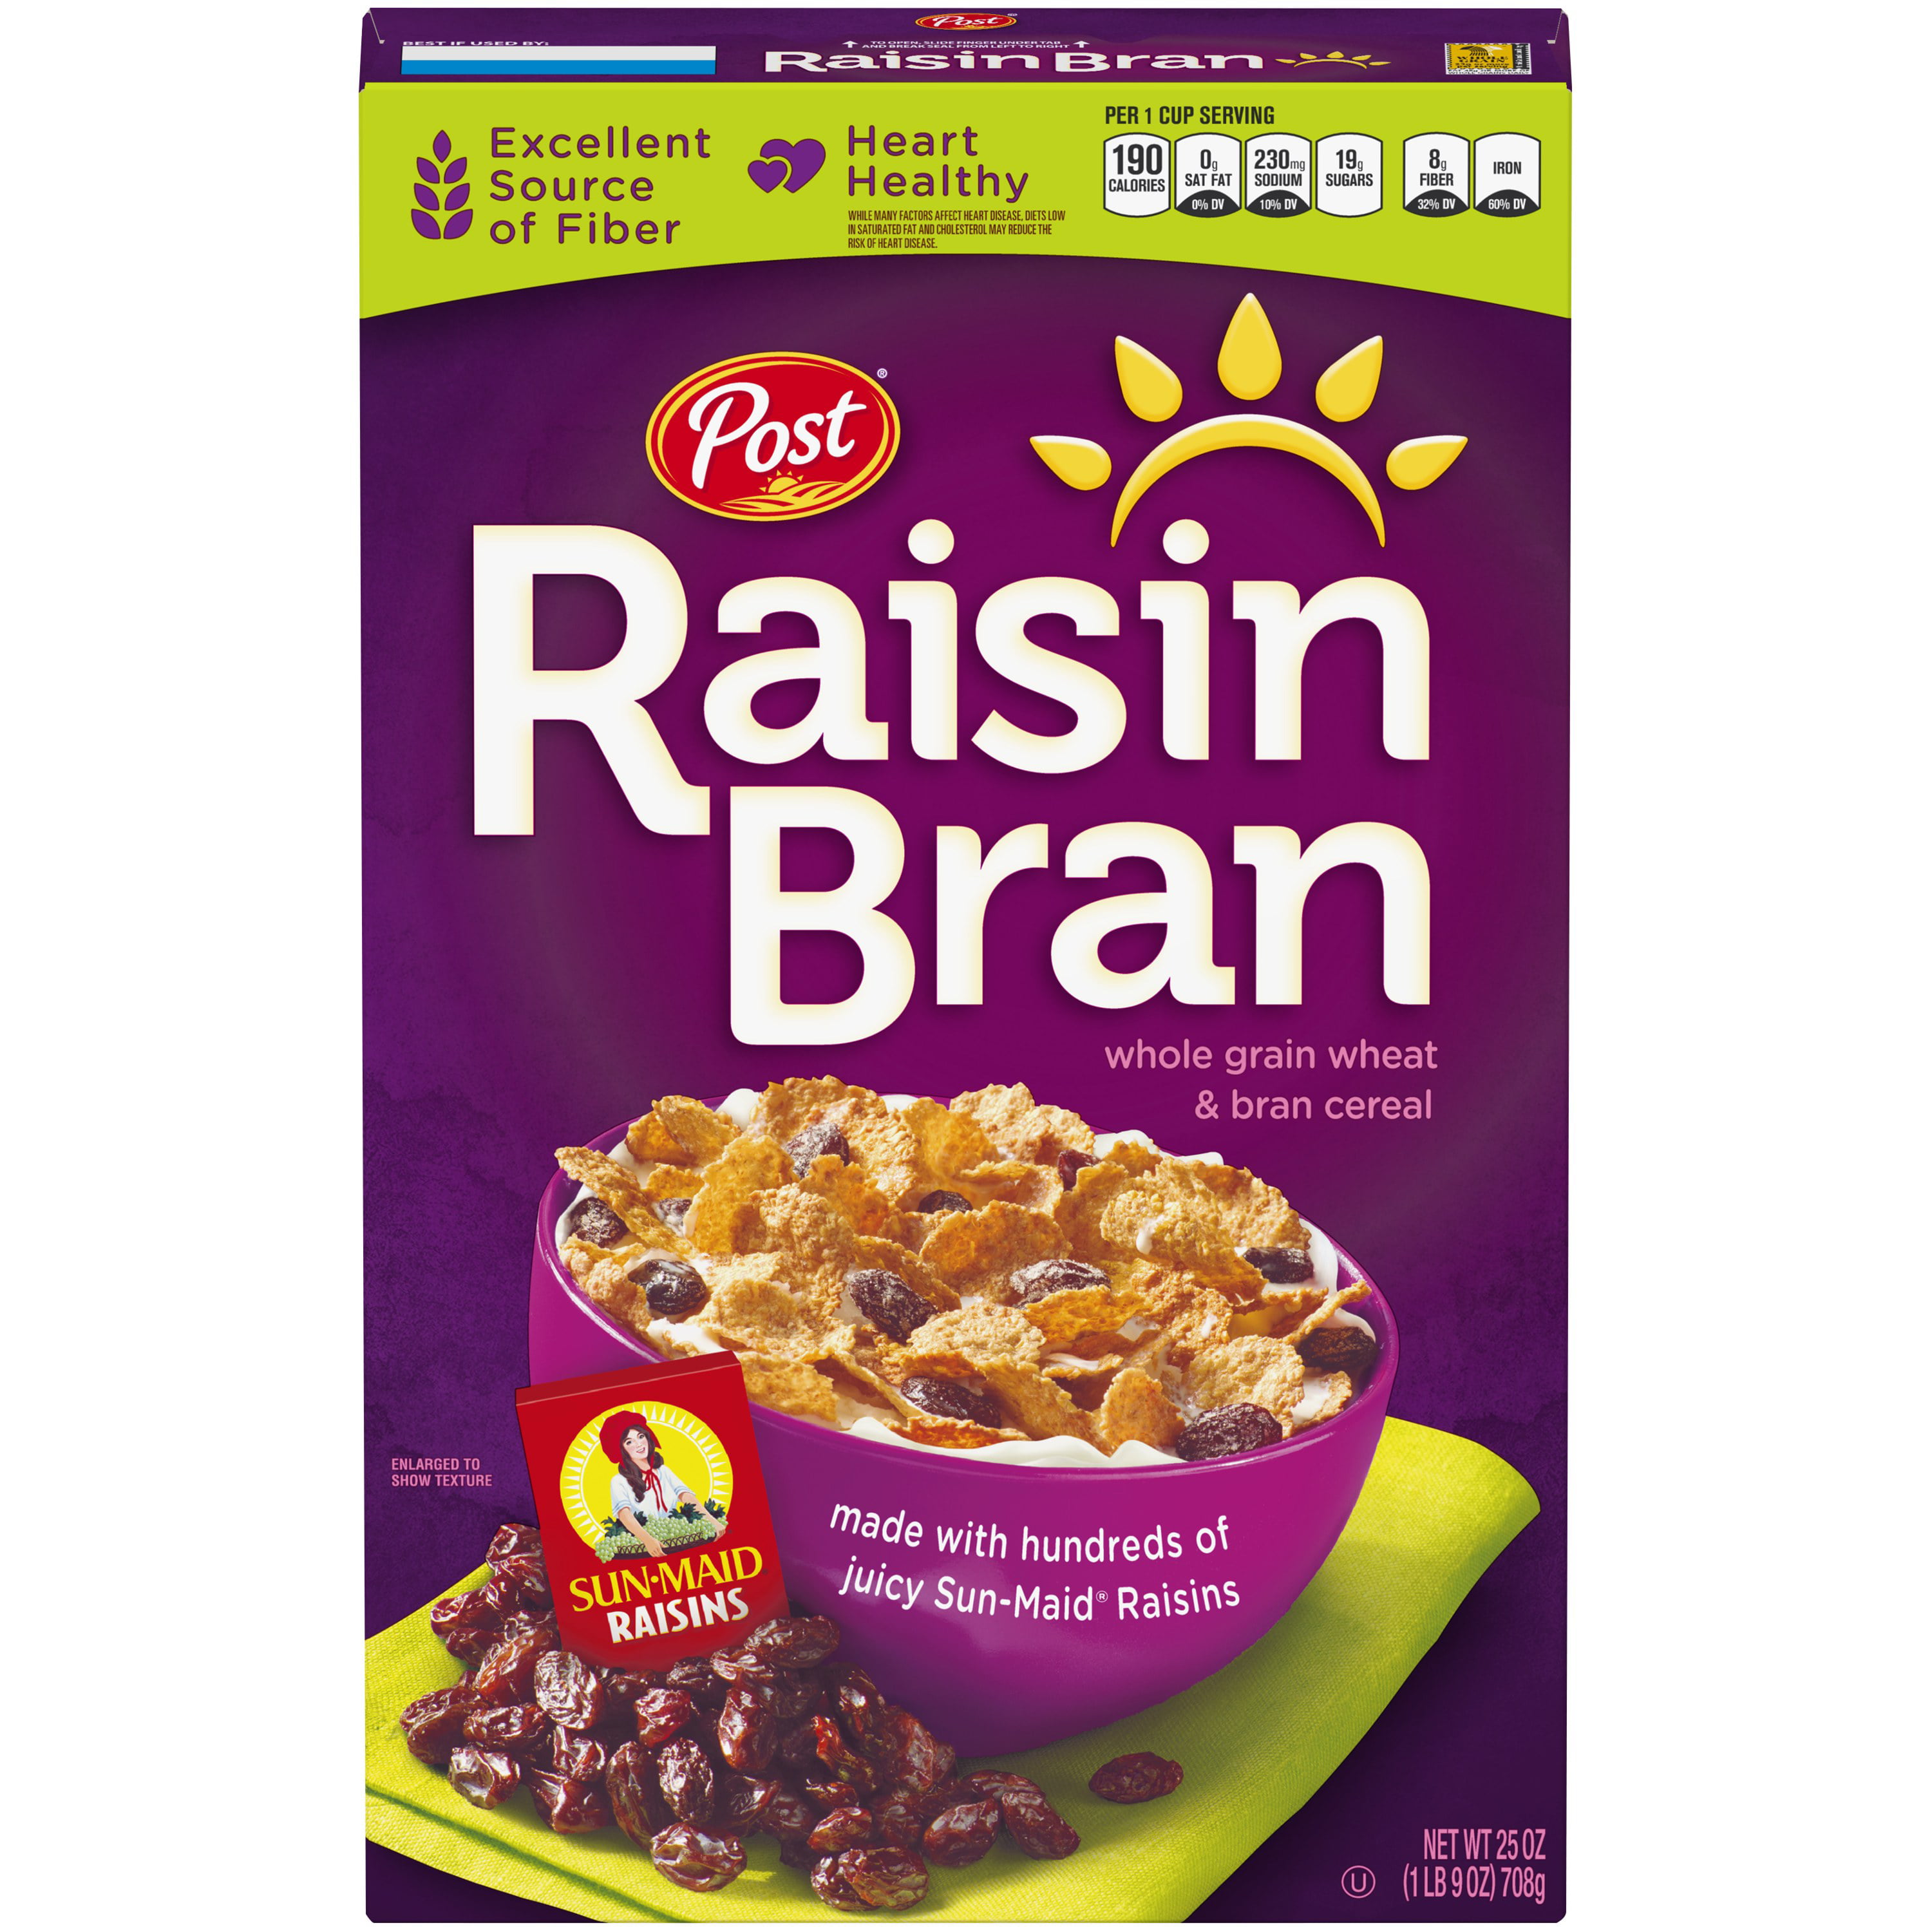 30 Raisin Bran Food Label - Label Design Ideas 2020